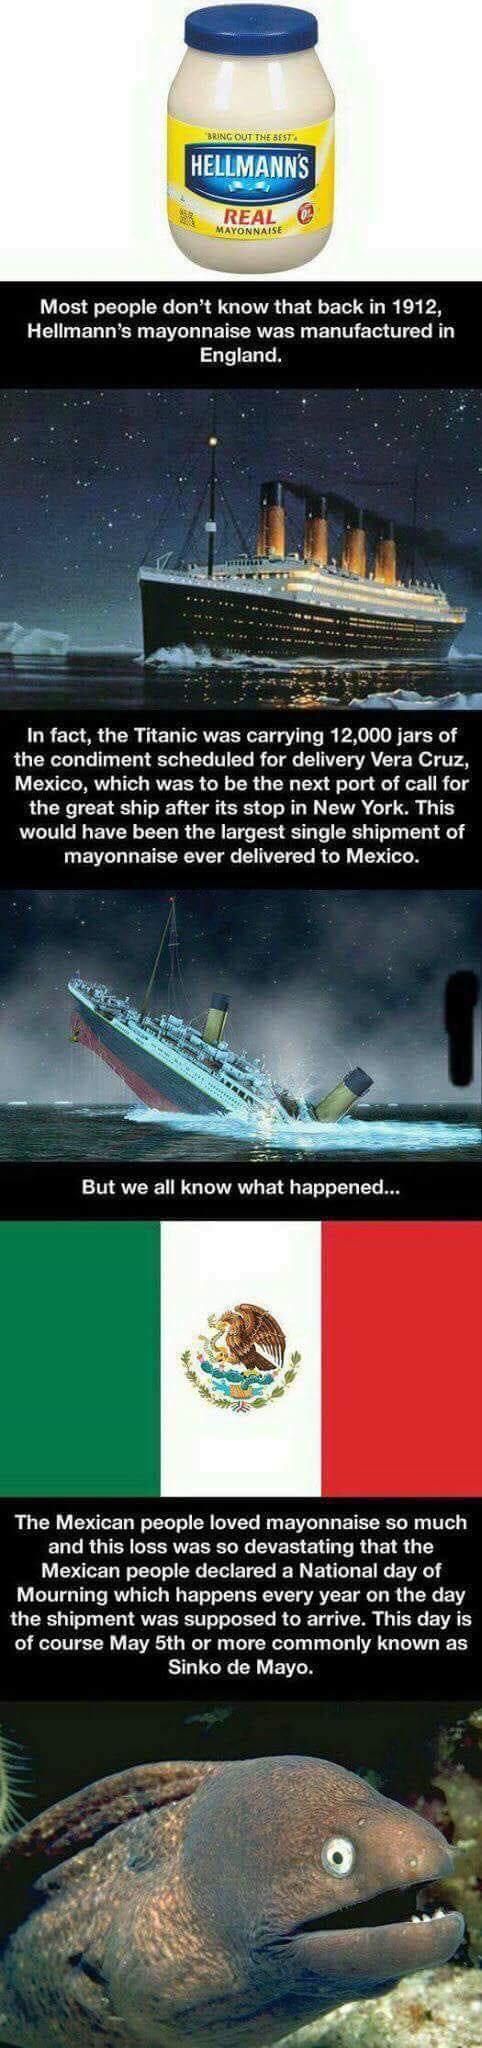 The Titanic’s Hidden Tragedy